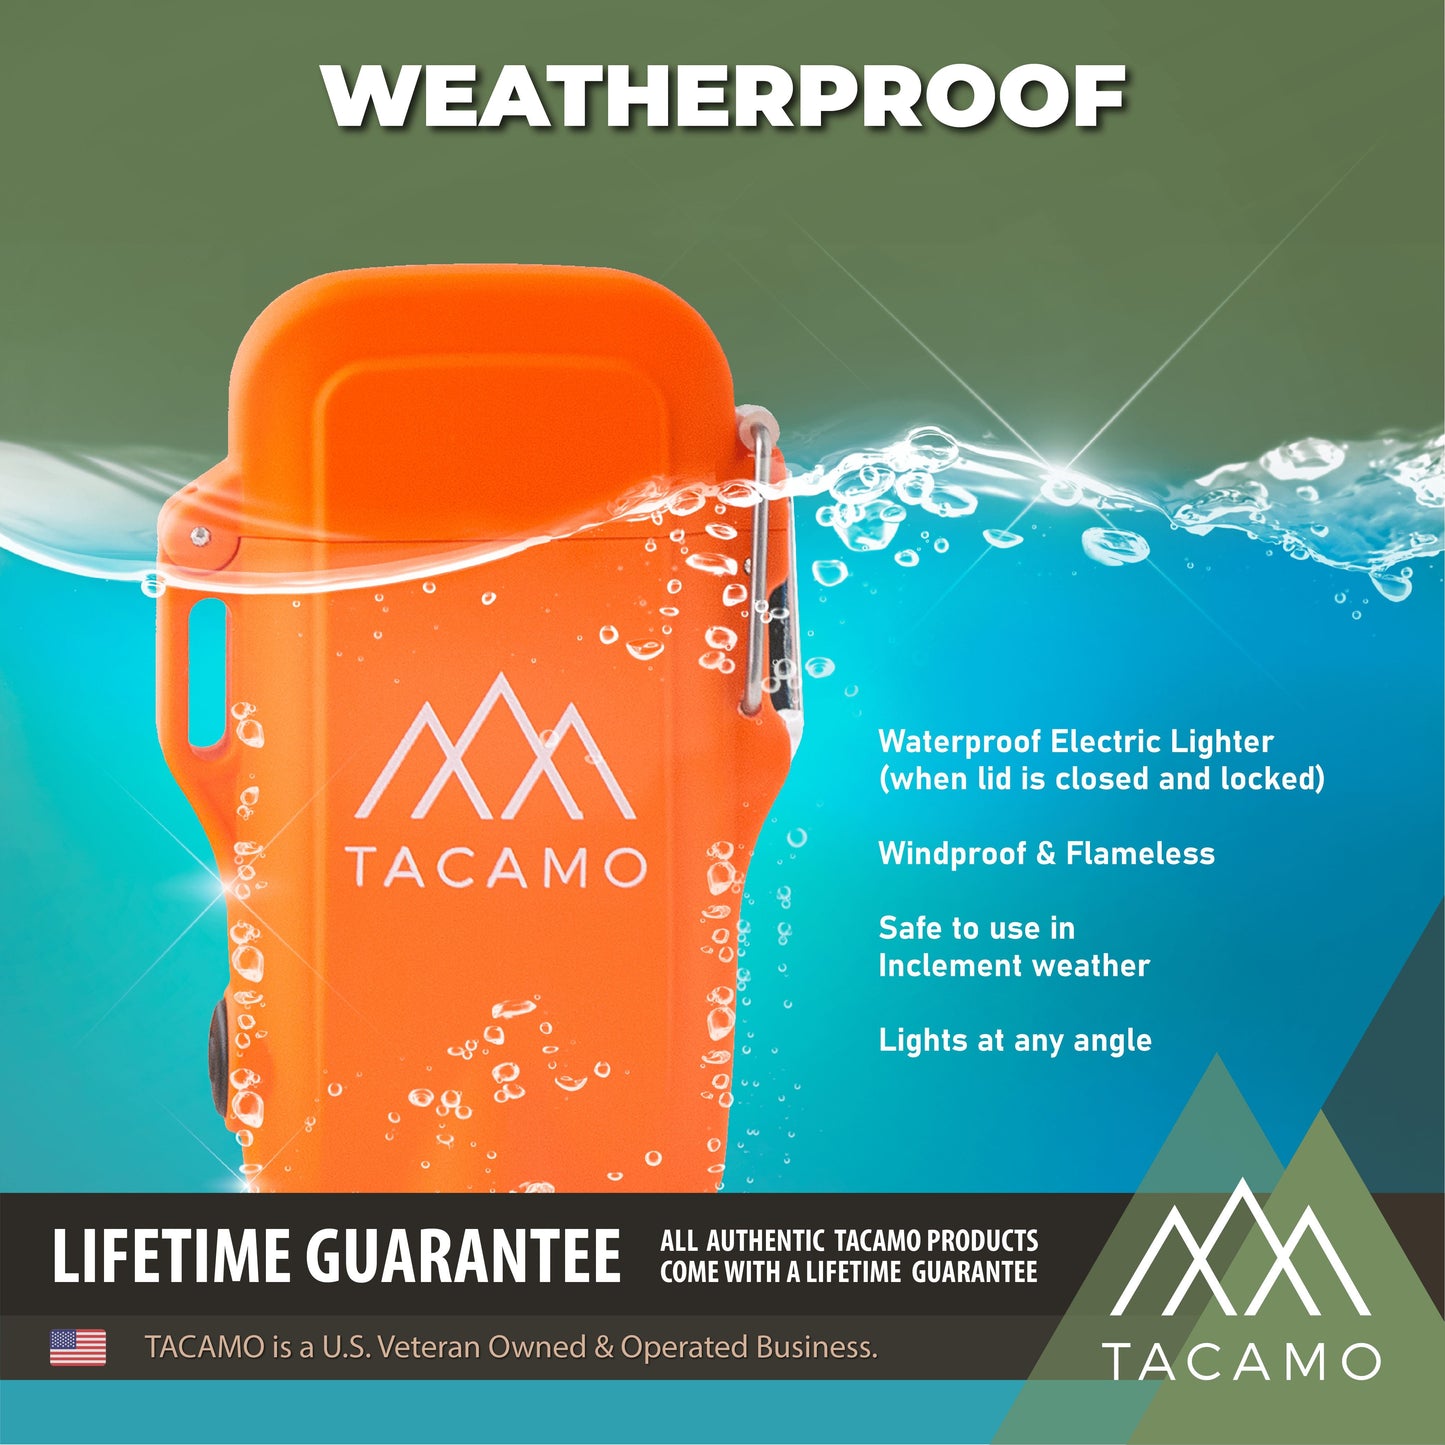 TACAMO H2 Lighter in weather-resistant case showcase